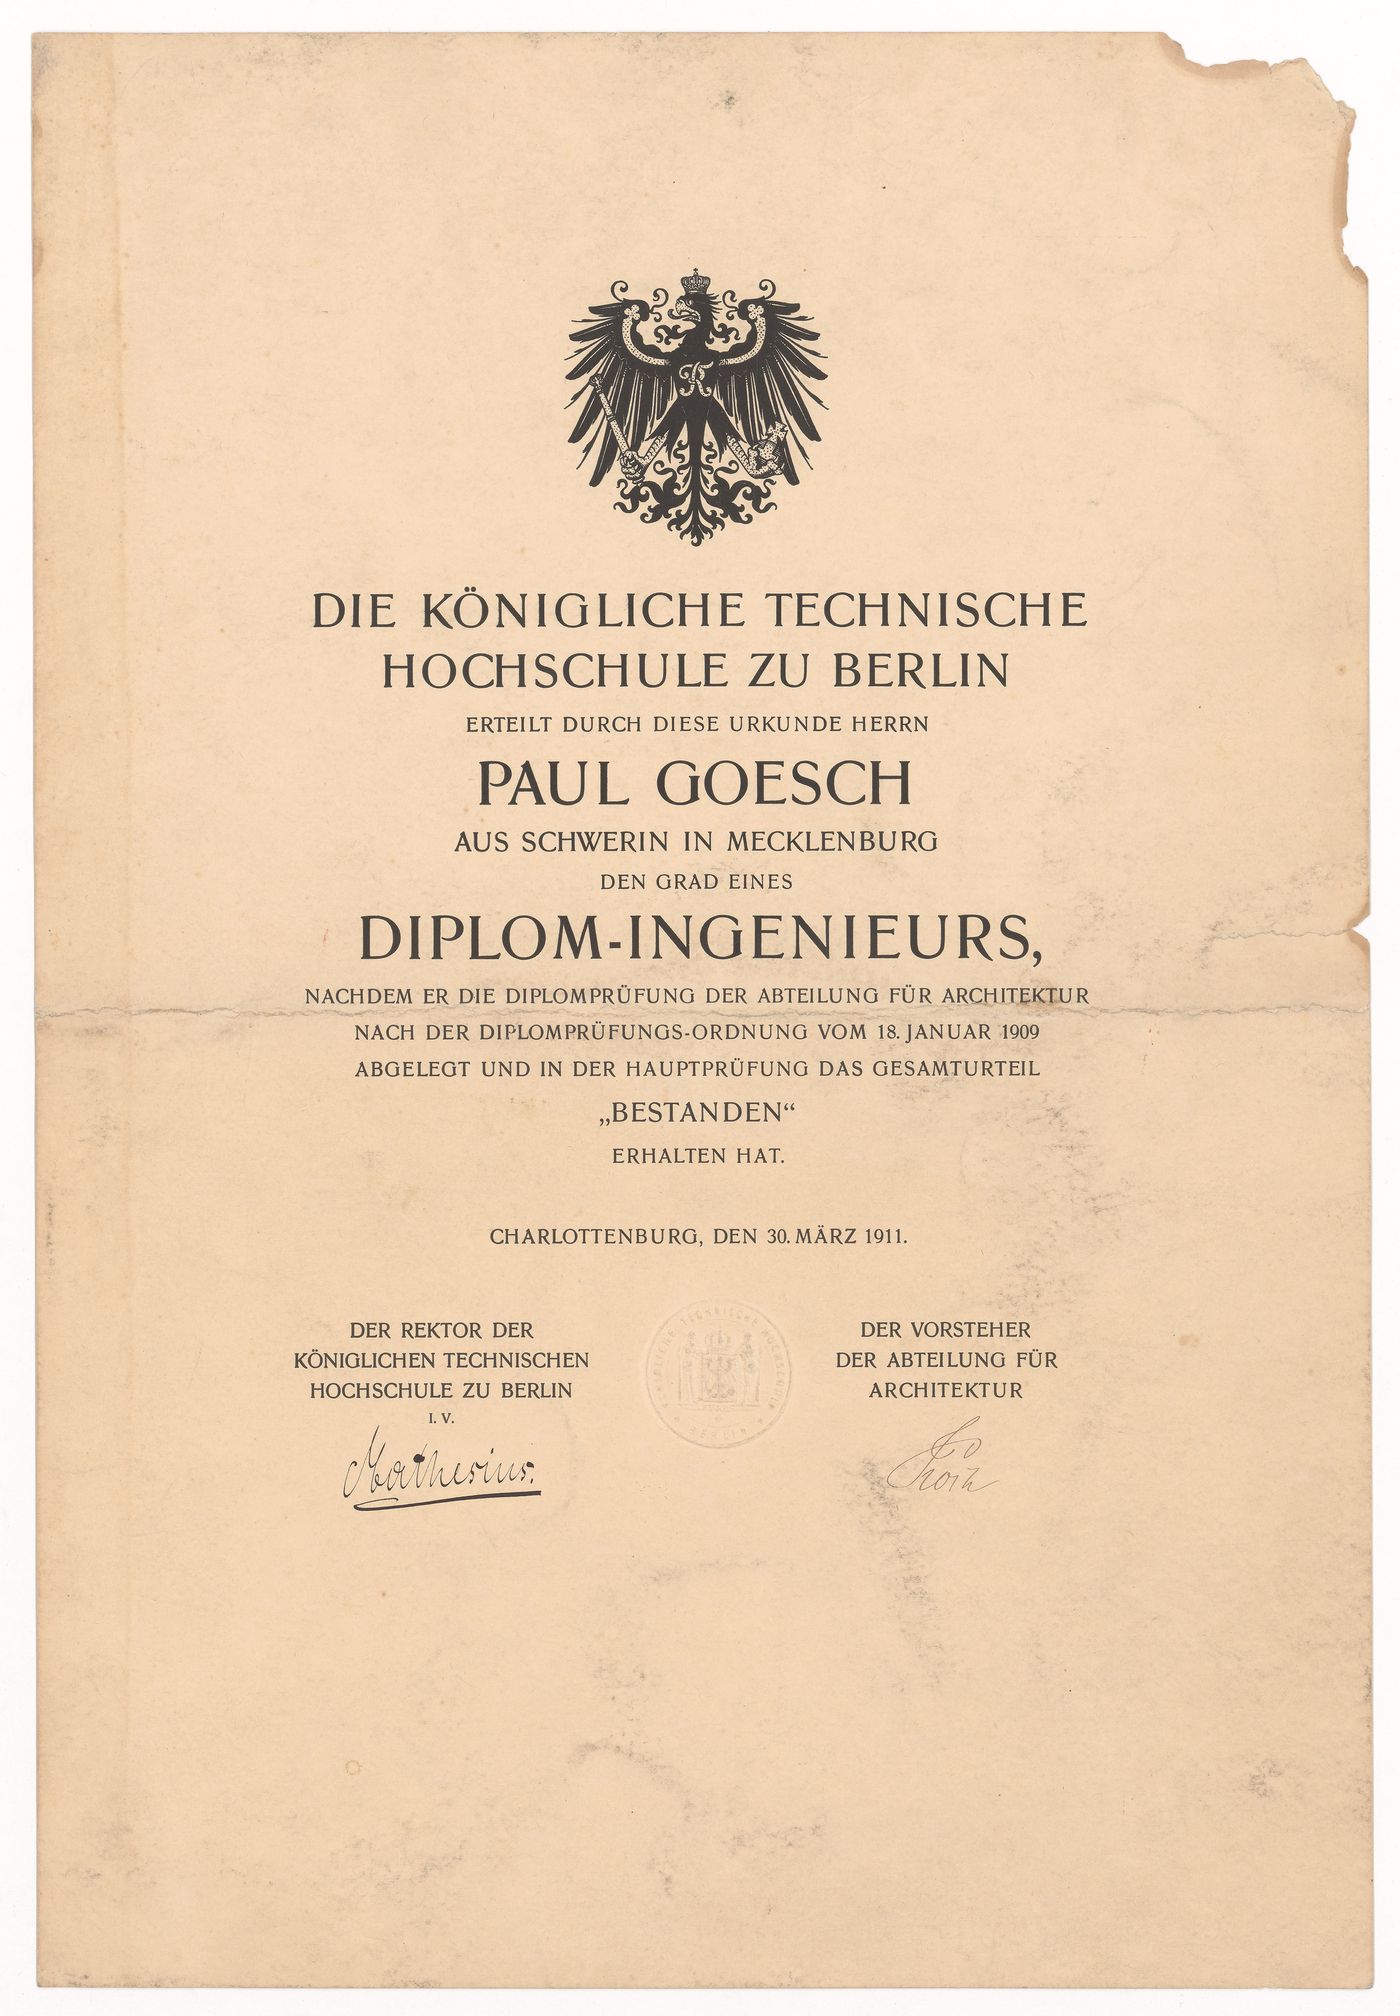 Paul Goesch's diploma from the Königliche Technische Hochschule in Berlin